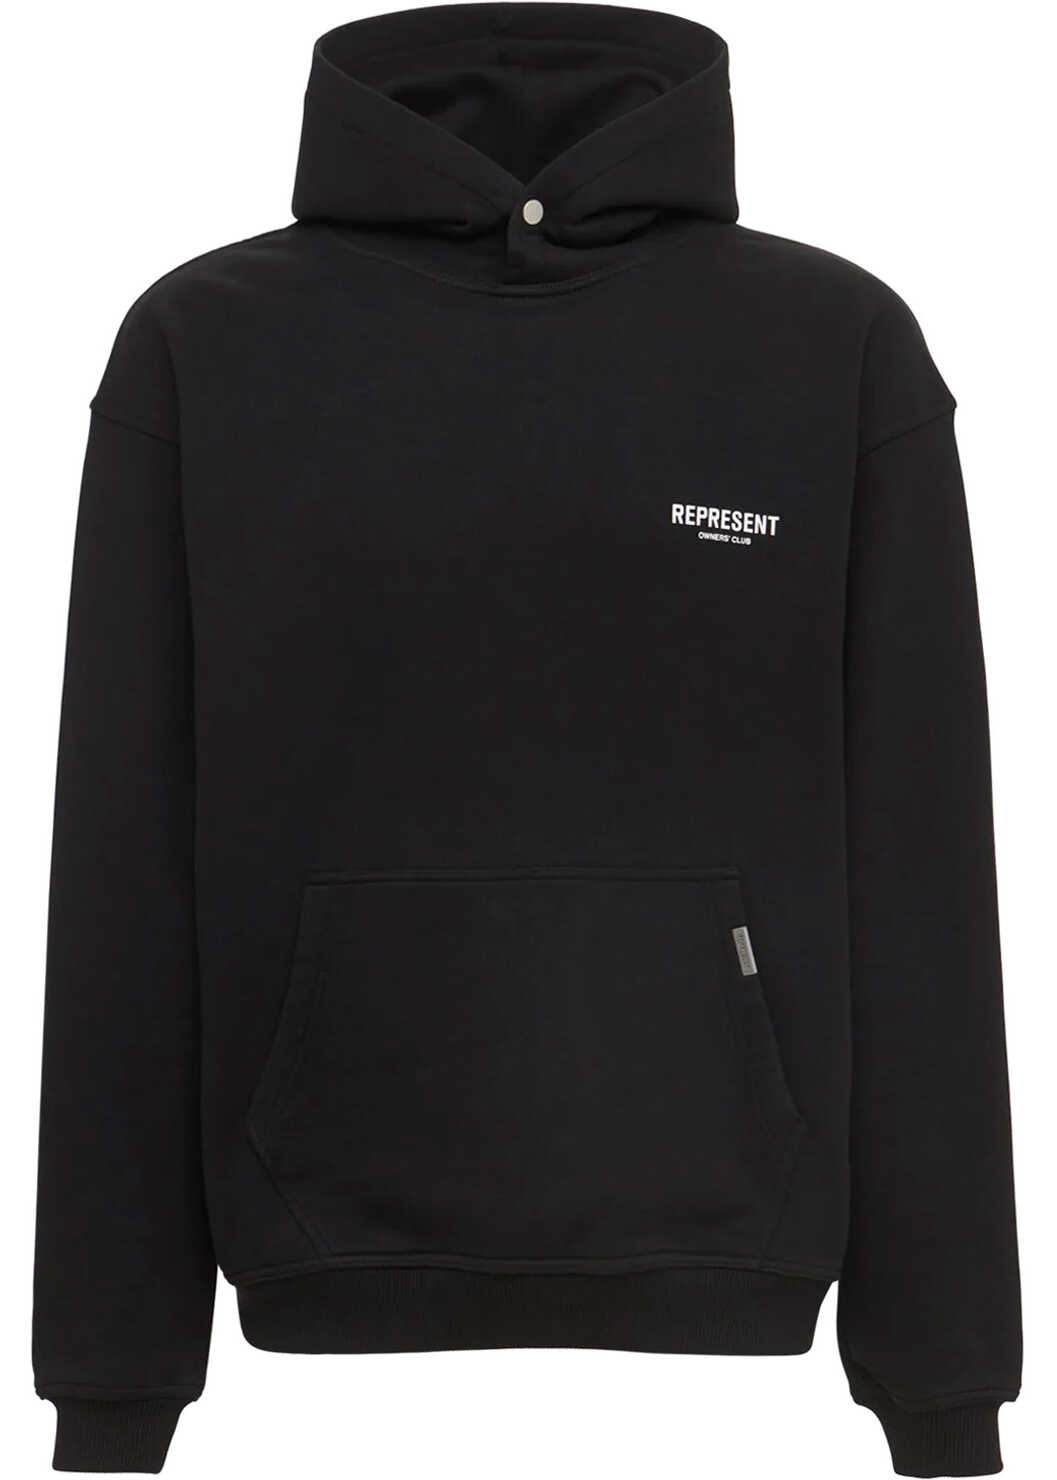 REPRESENT Sweatshirt Black